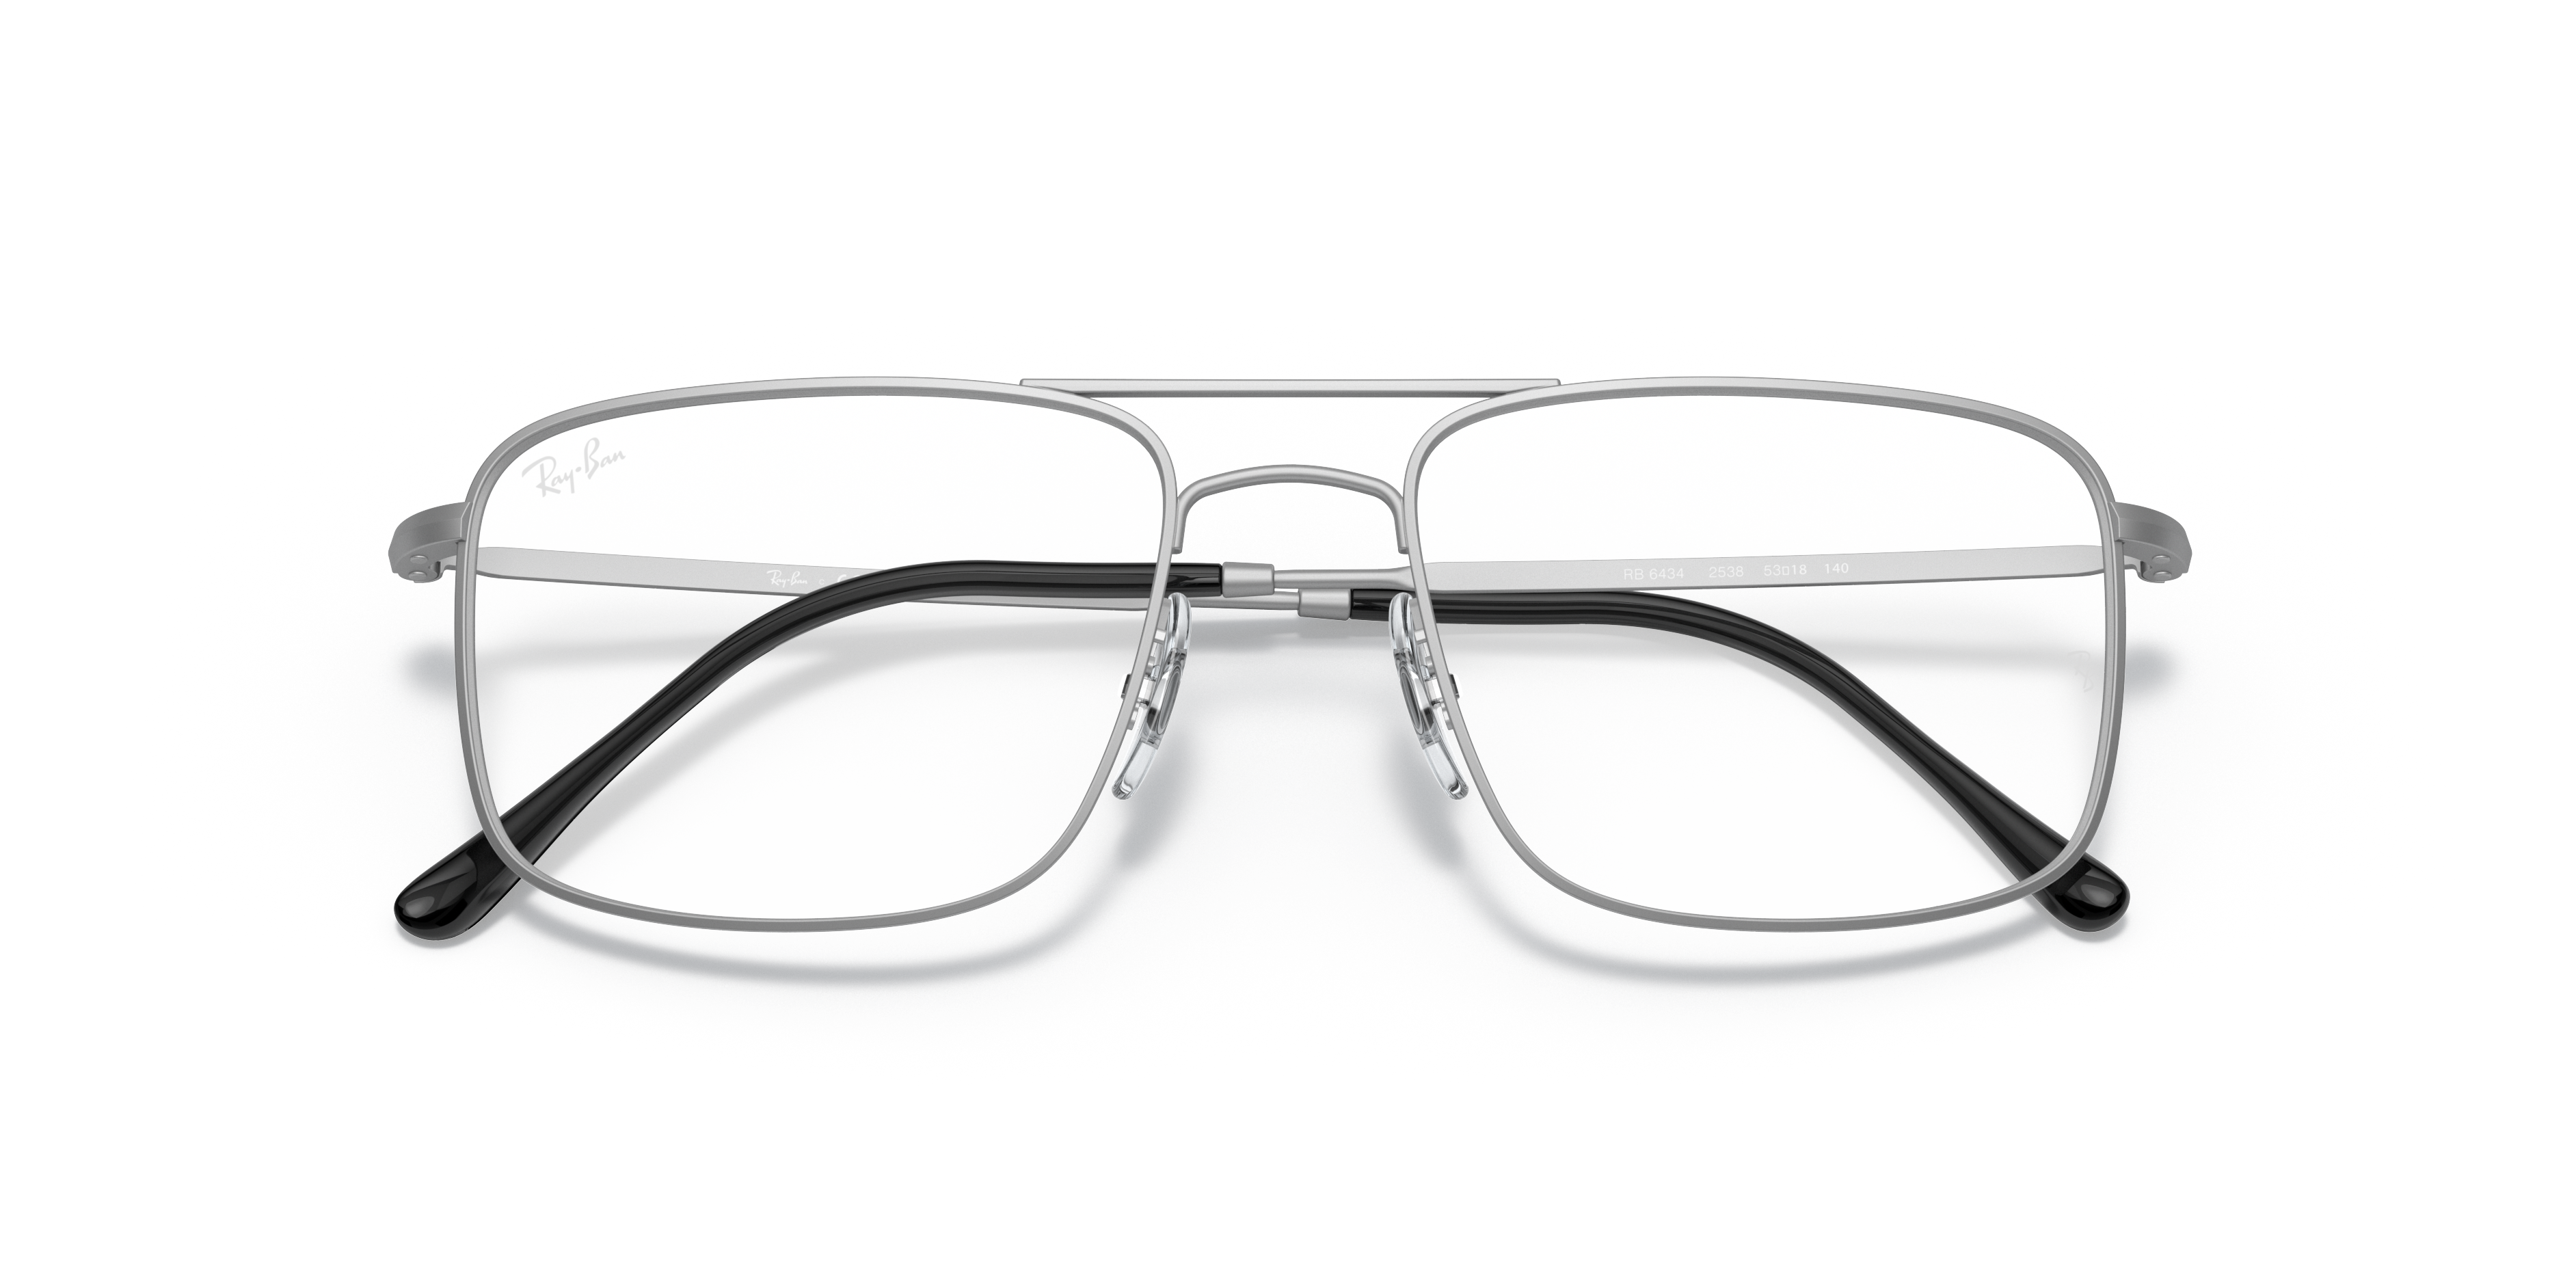 Rb6434 Optics Eyeglasses with Silver Frame | Ray-Ban®